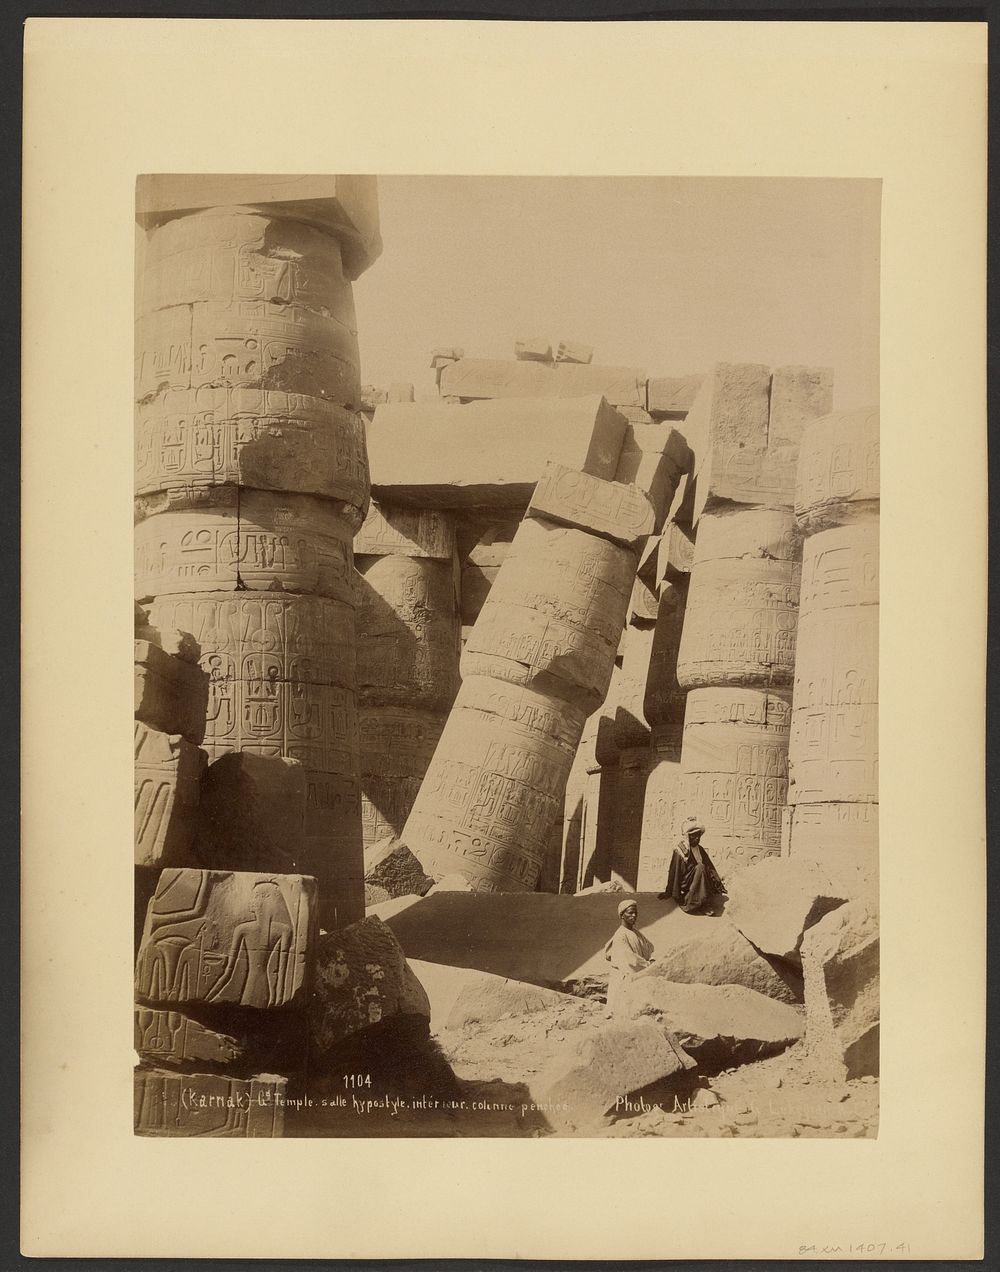 (Karnak) Gd. Temple, salle hypostyle, interieur, colonne penchee by G Lekegian